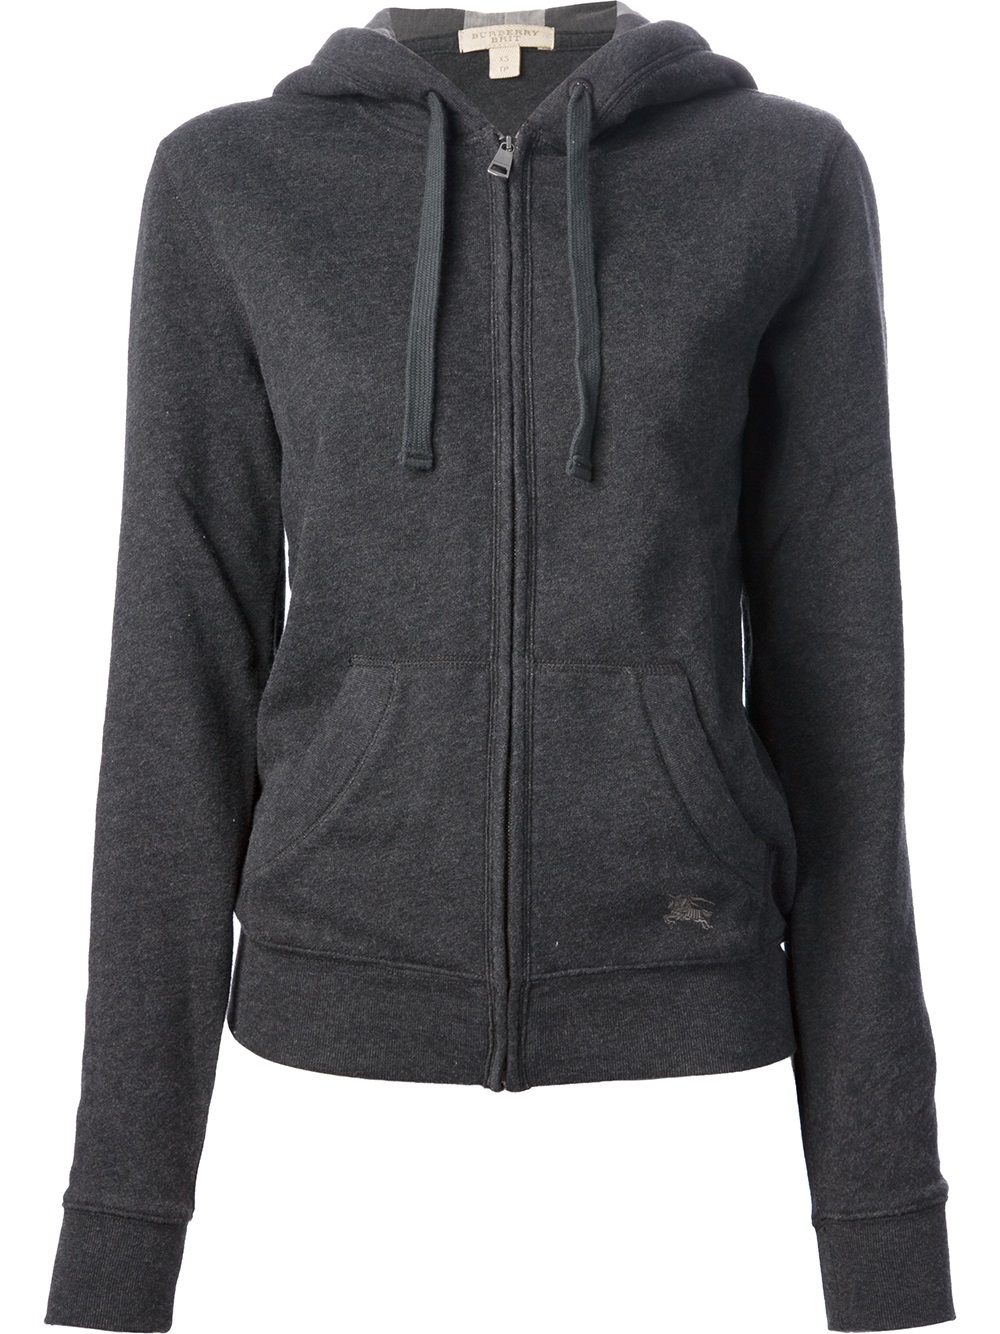 burberry hoodie 2013